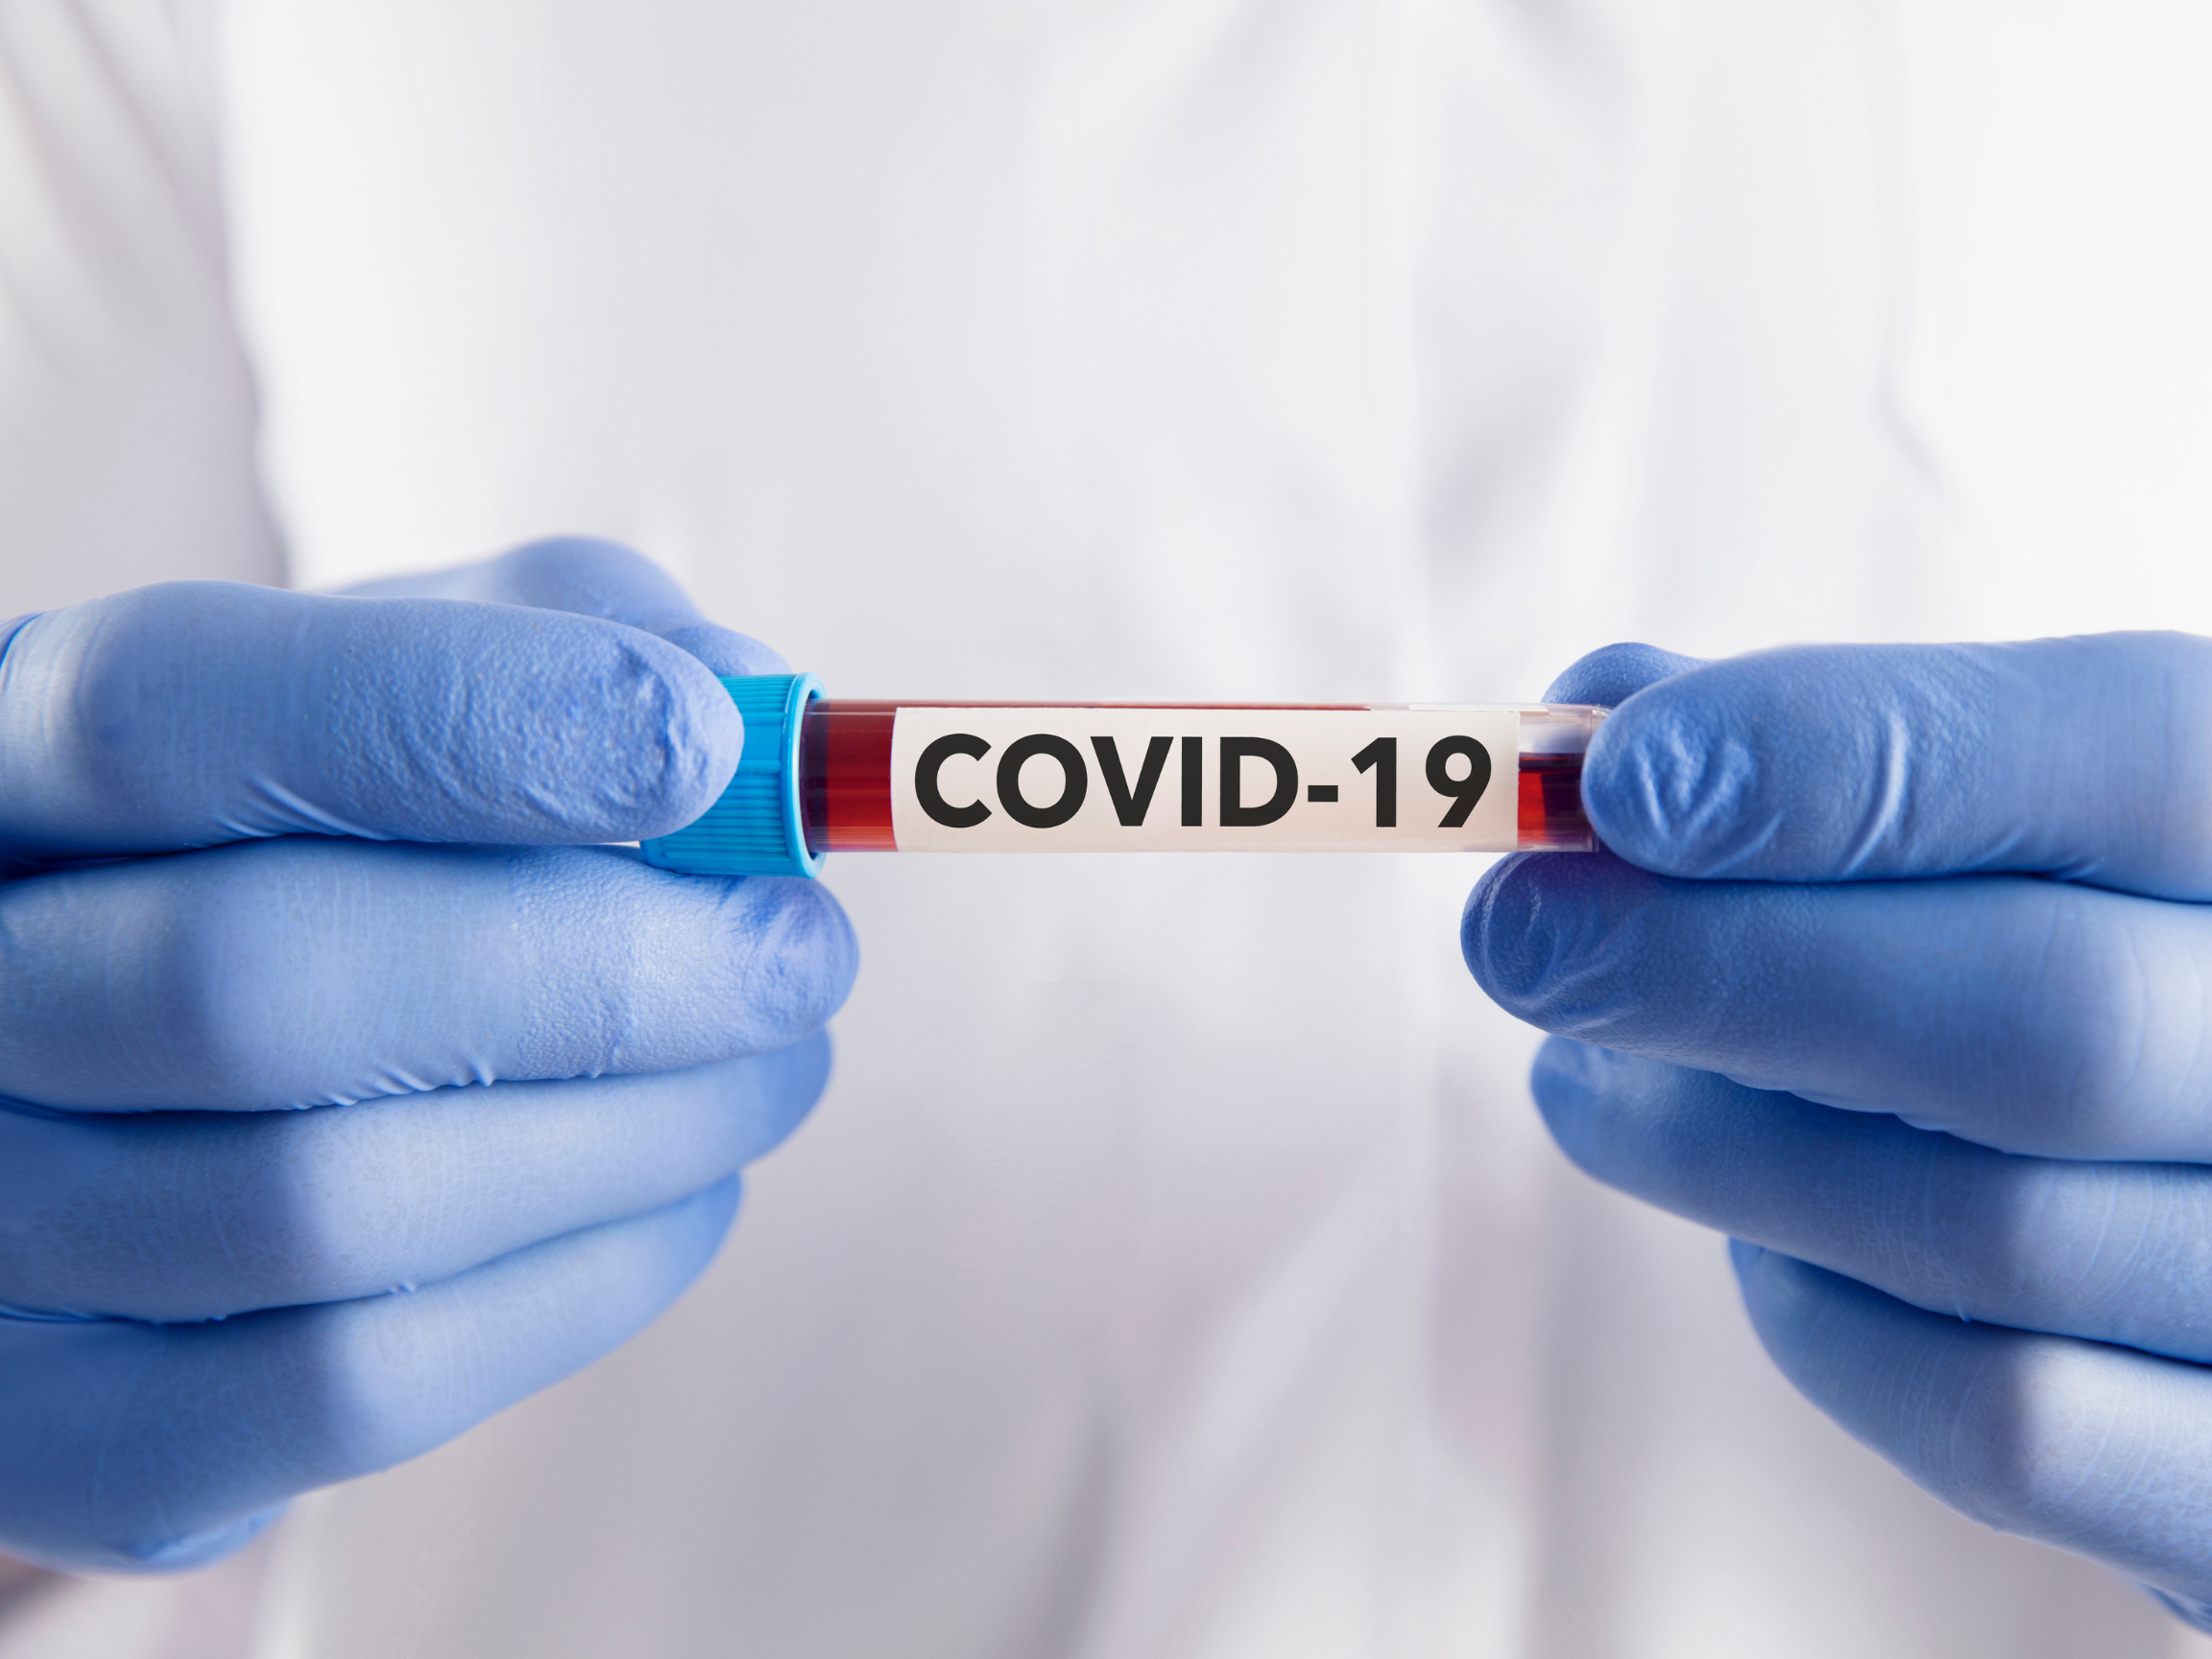 Covid-19 Treatment